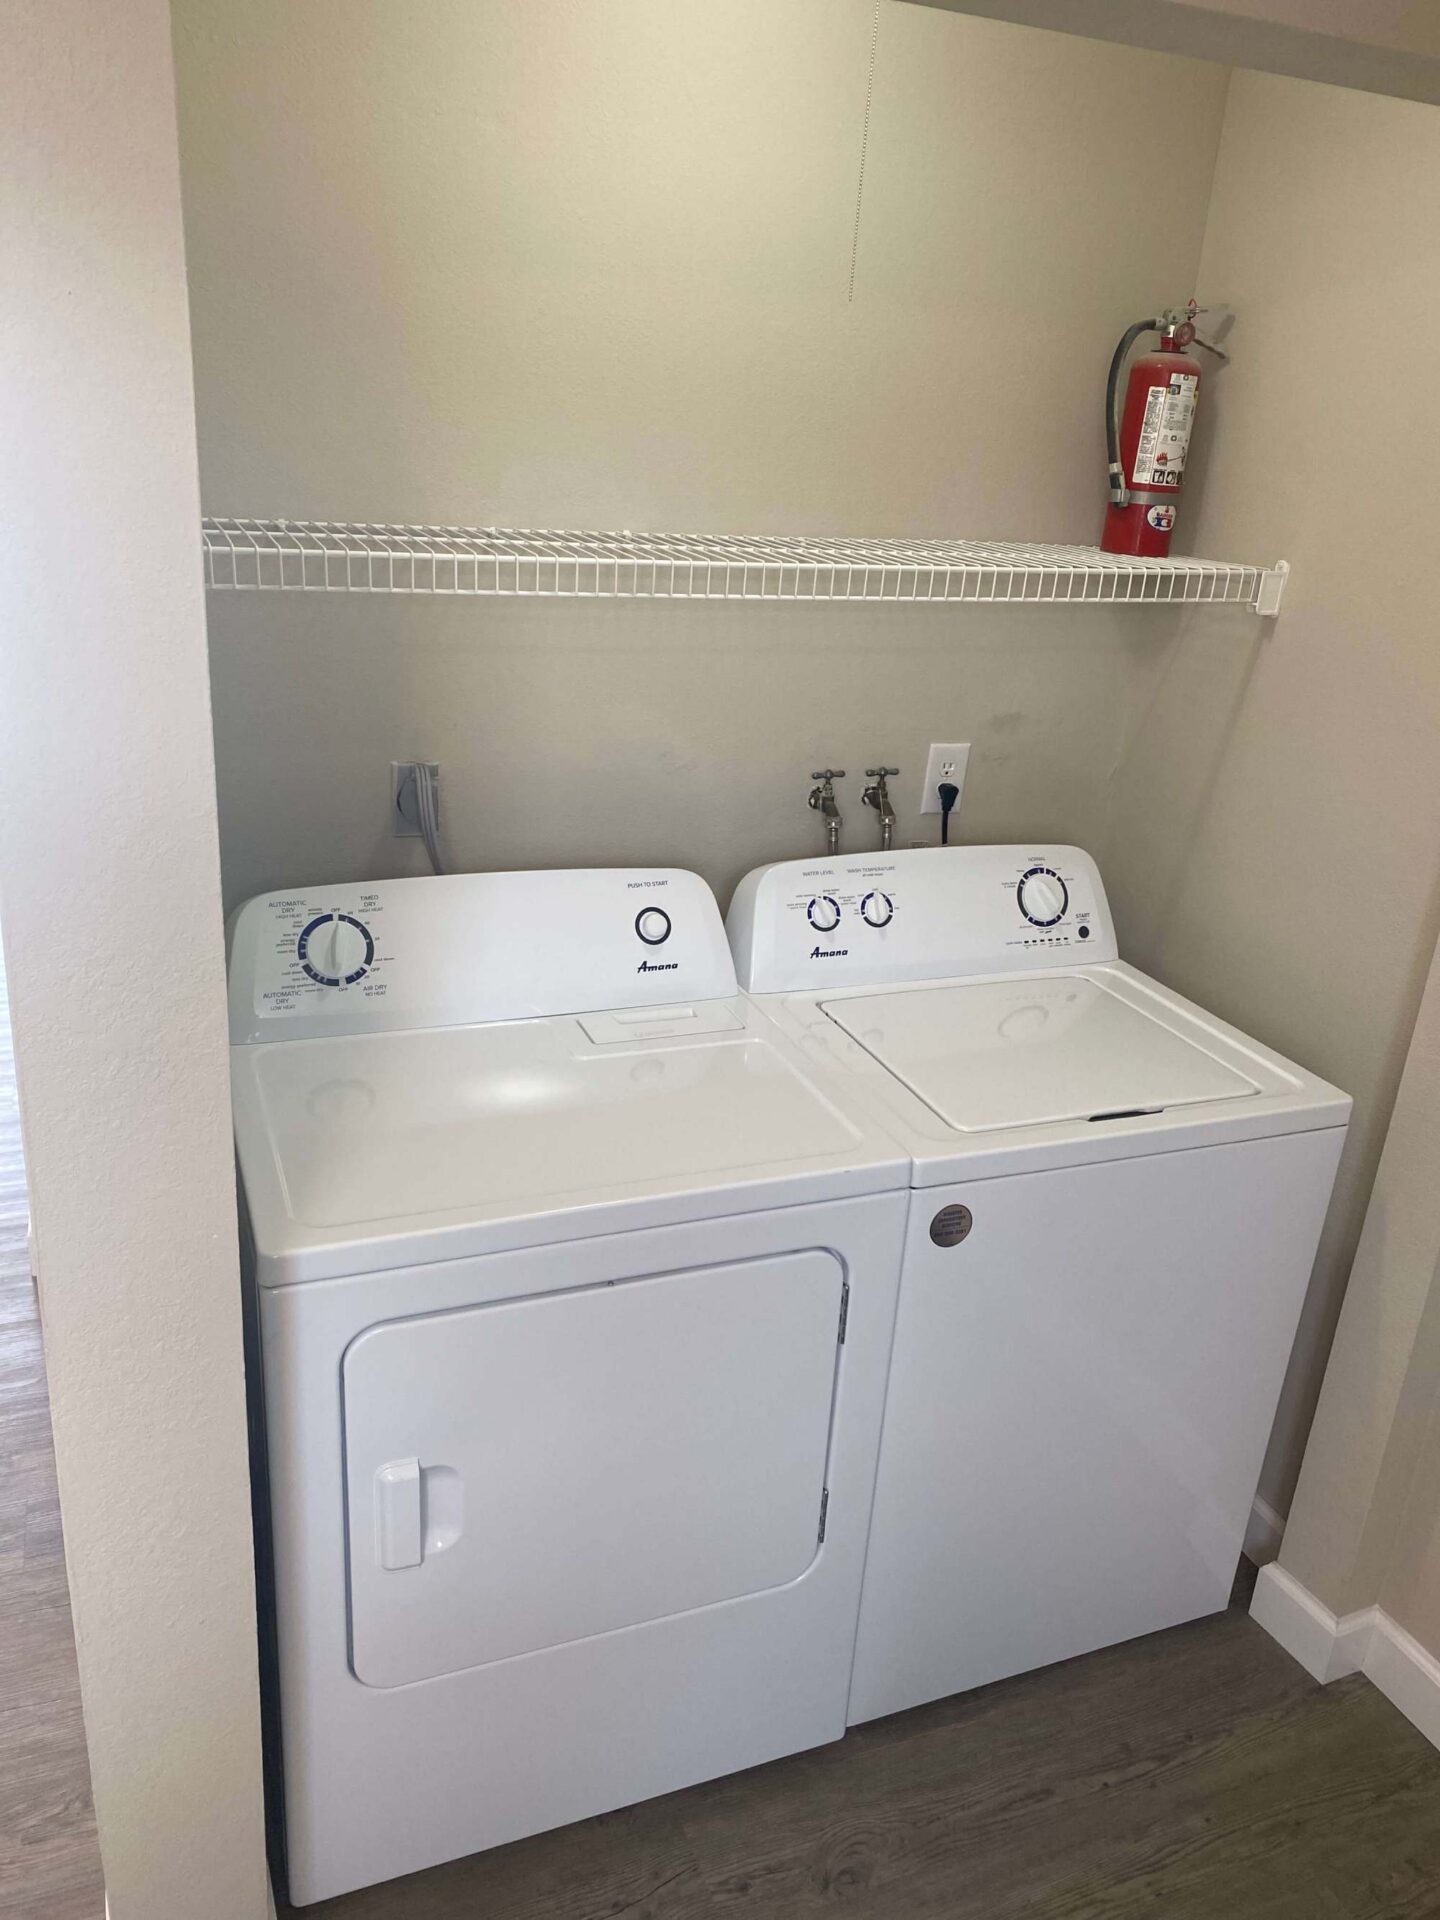 Residential or apartment washing machine